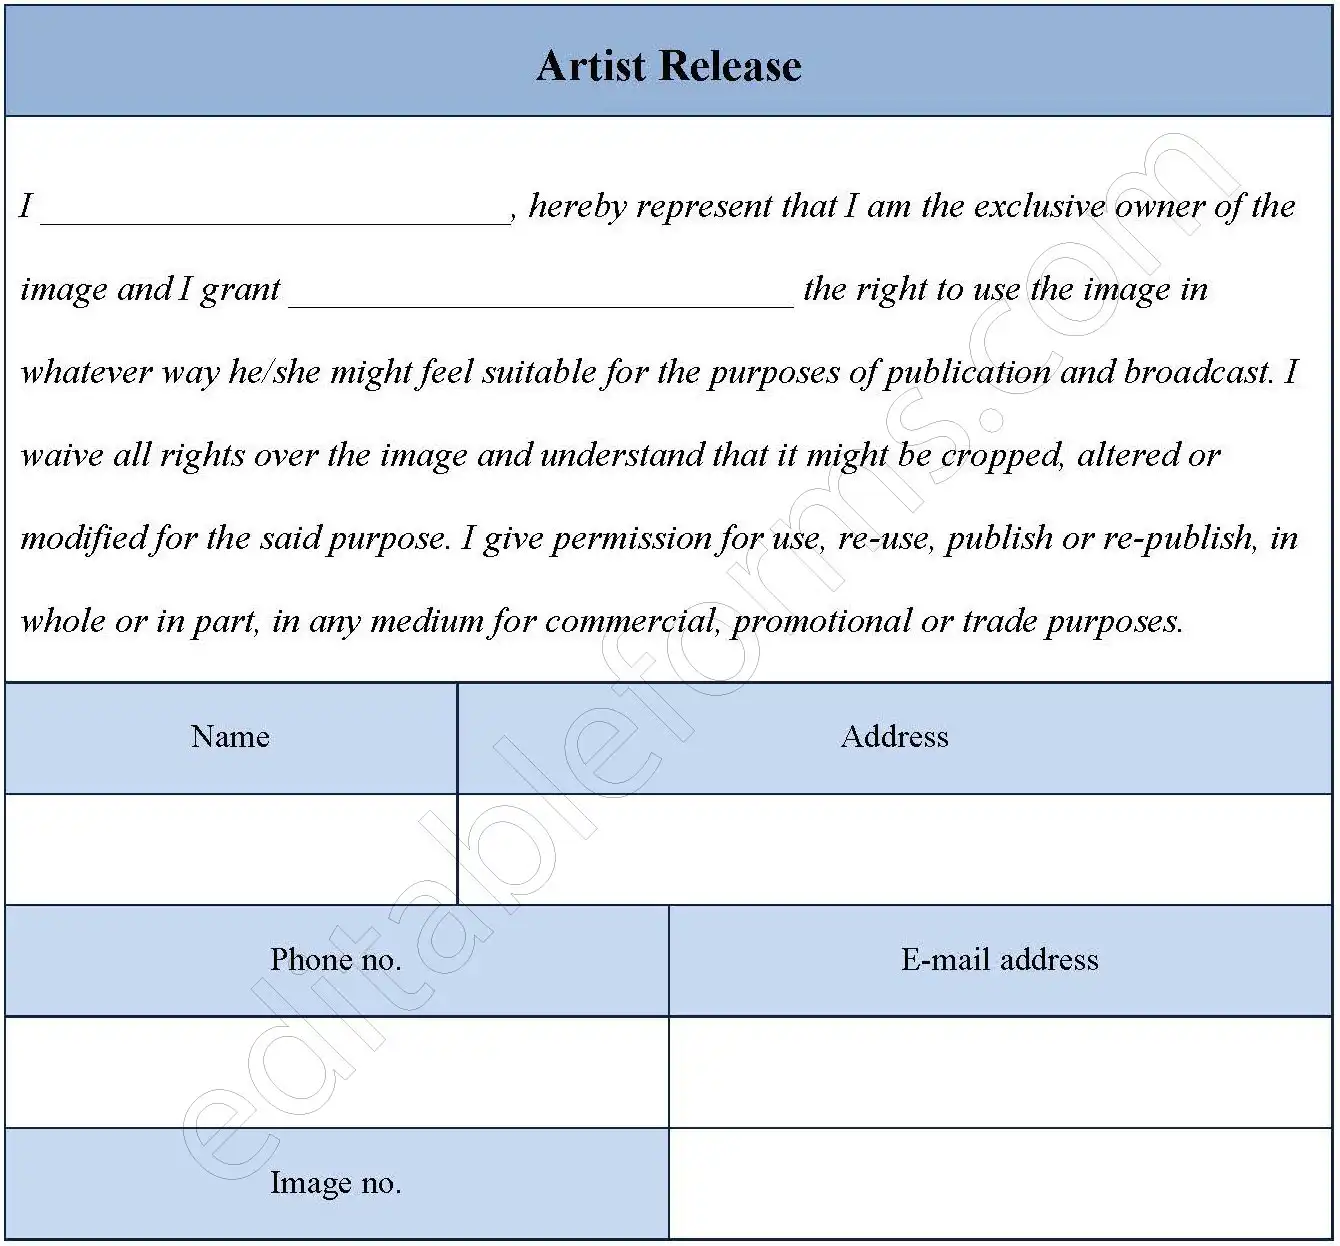 Artist Release Fillable PDF Template